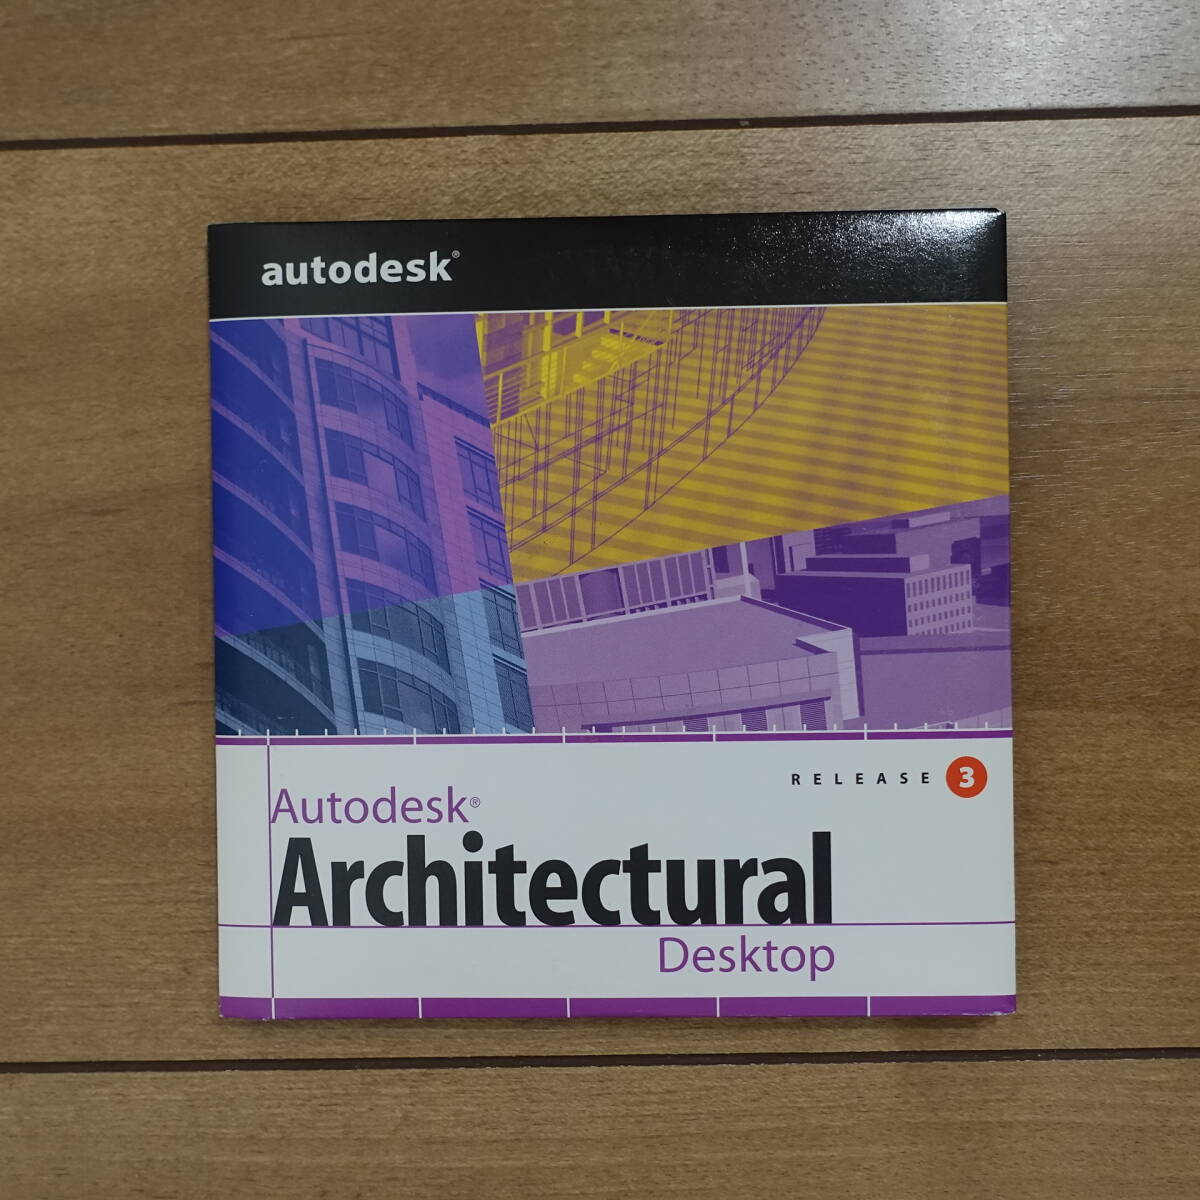 Autodesk Architectural Desktop RELEASE 3 シリアル番号 CDキー付き_画像3